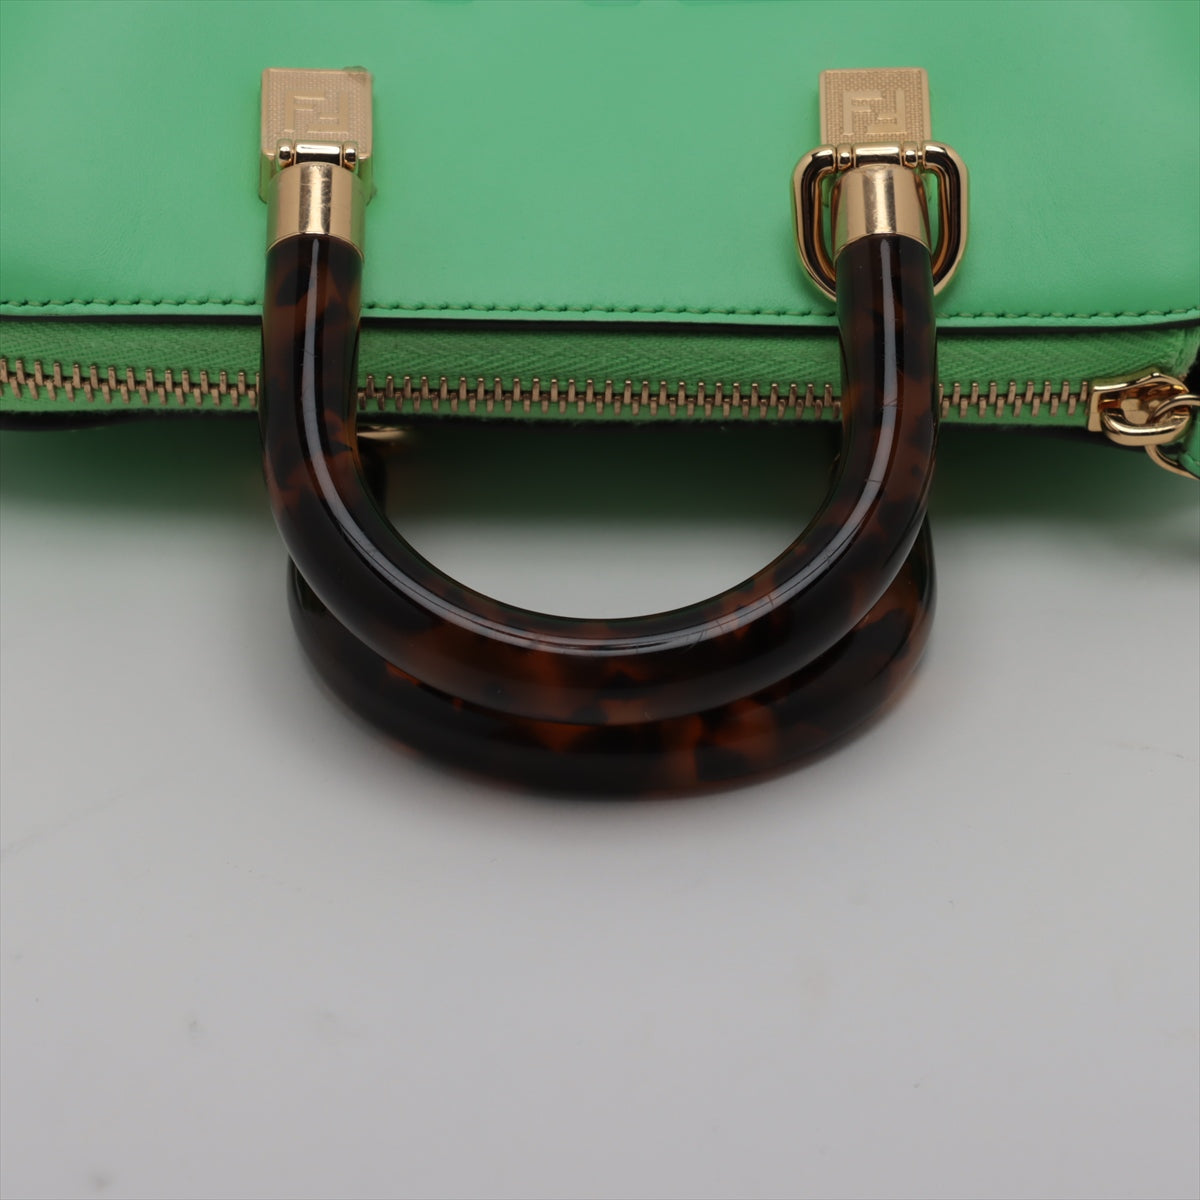 Fendi By The Way Mini Leather Handbag Green 8BS067 Strap shortage